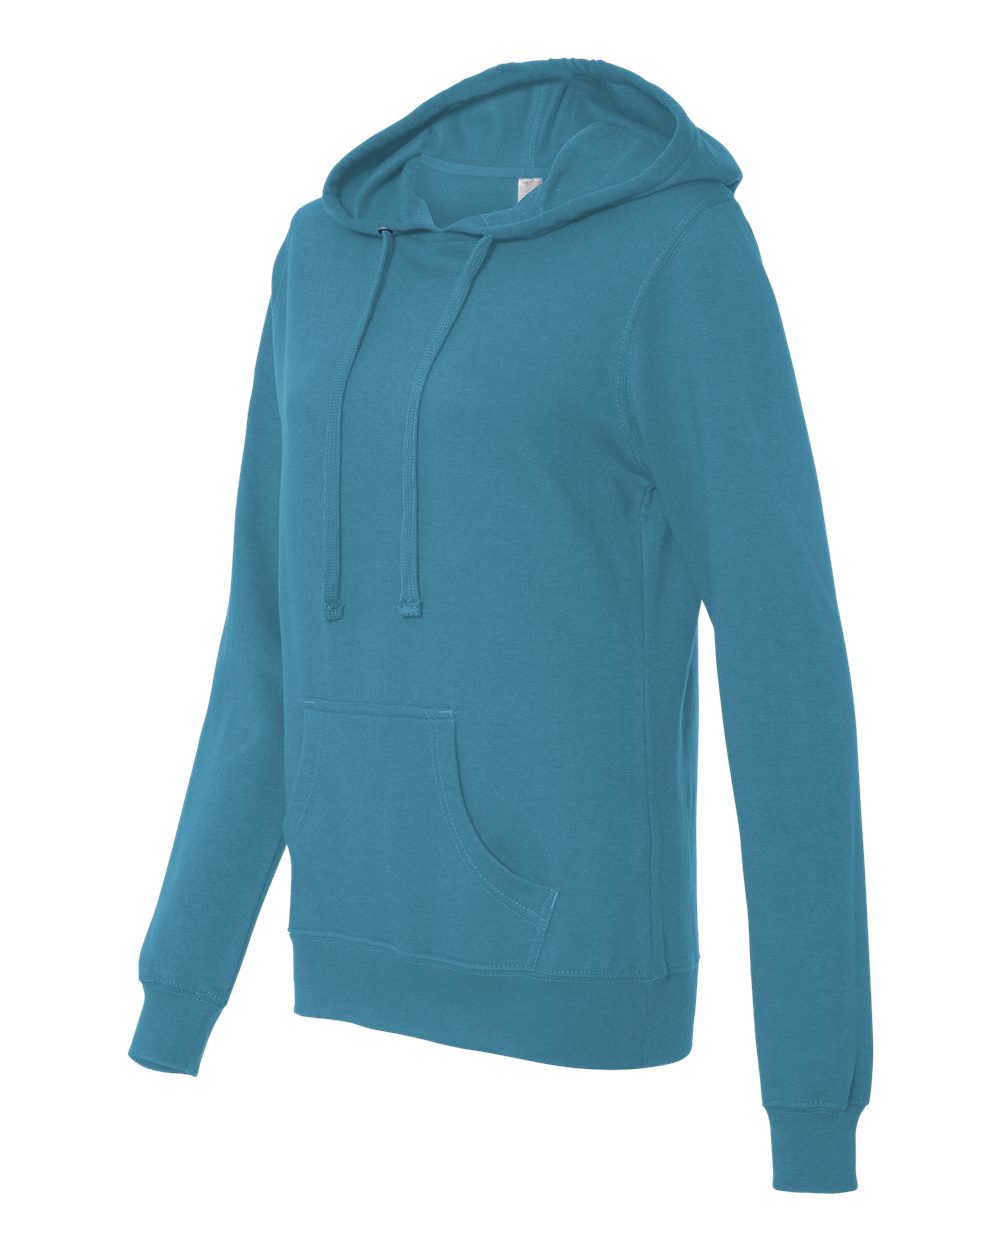 Independent Trading Co. Juniors' Heavenly Fleece Lightweight Pullover Hooded Sweatshirt - SS650